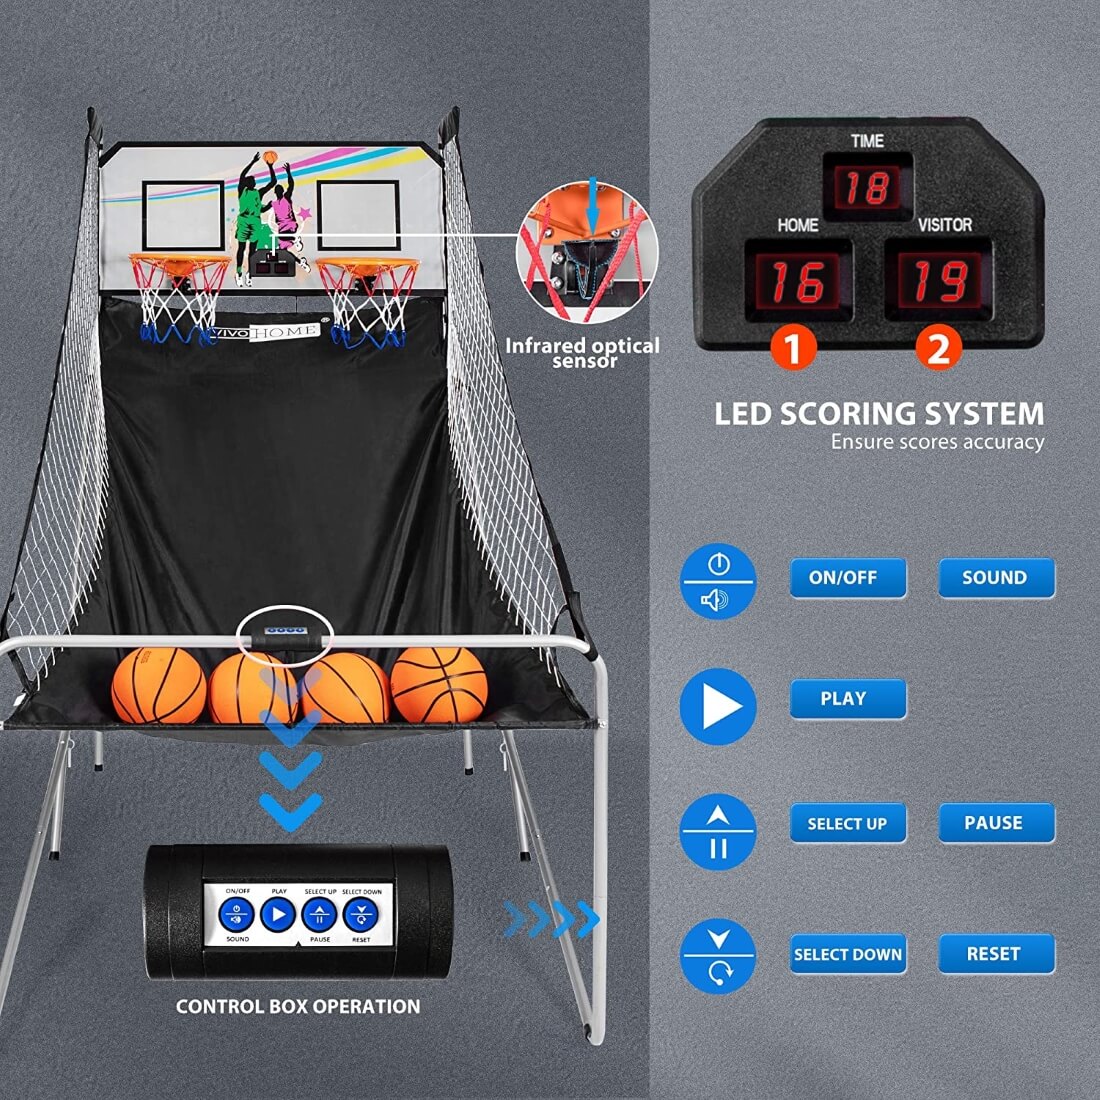 University of Virginia Cavaliers Hoops Pro Basketball Home Arcade Game